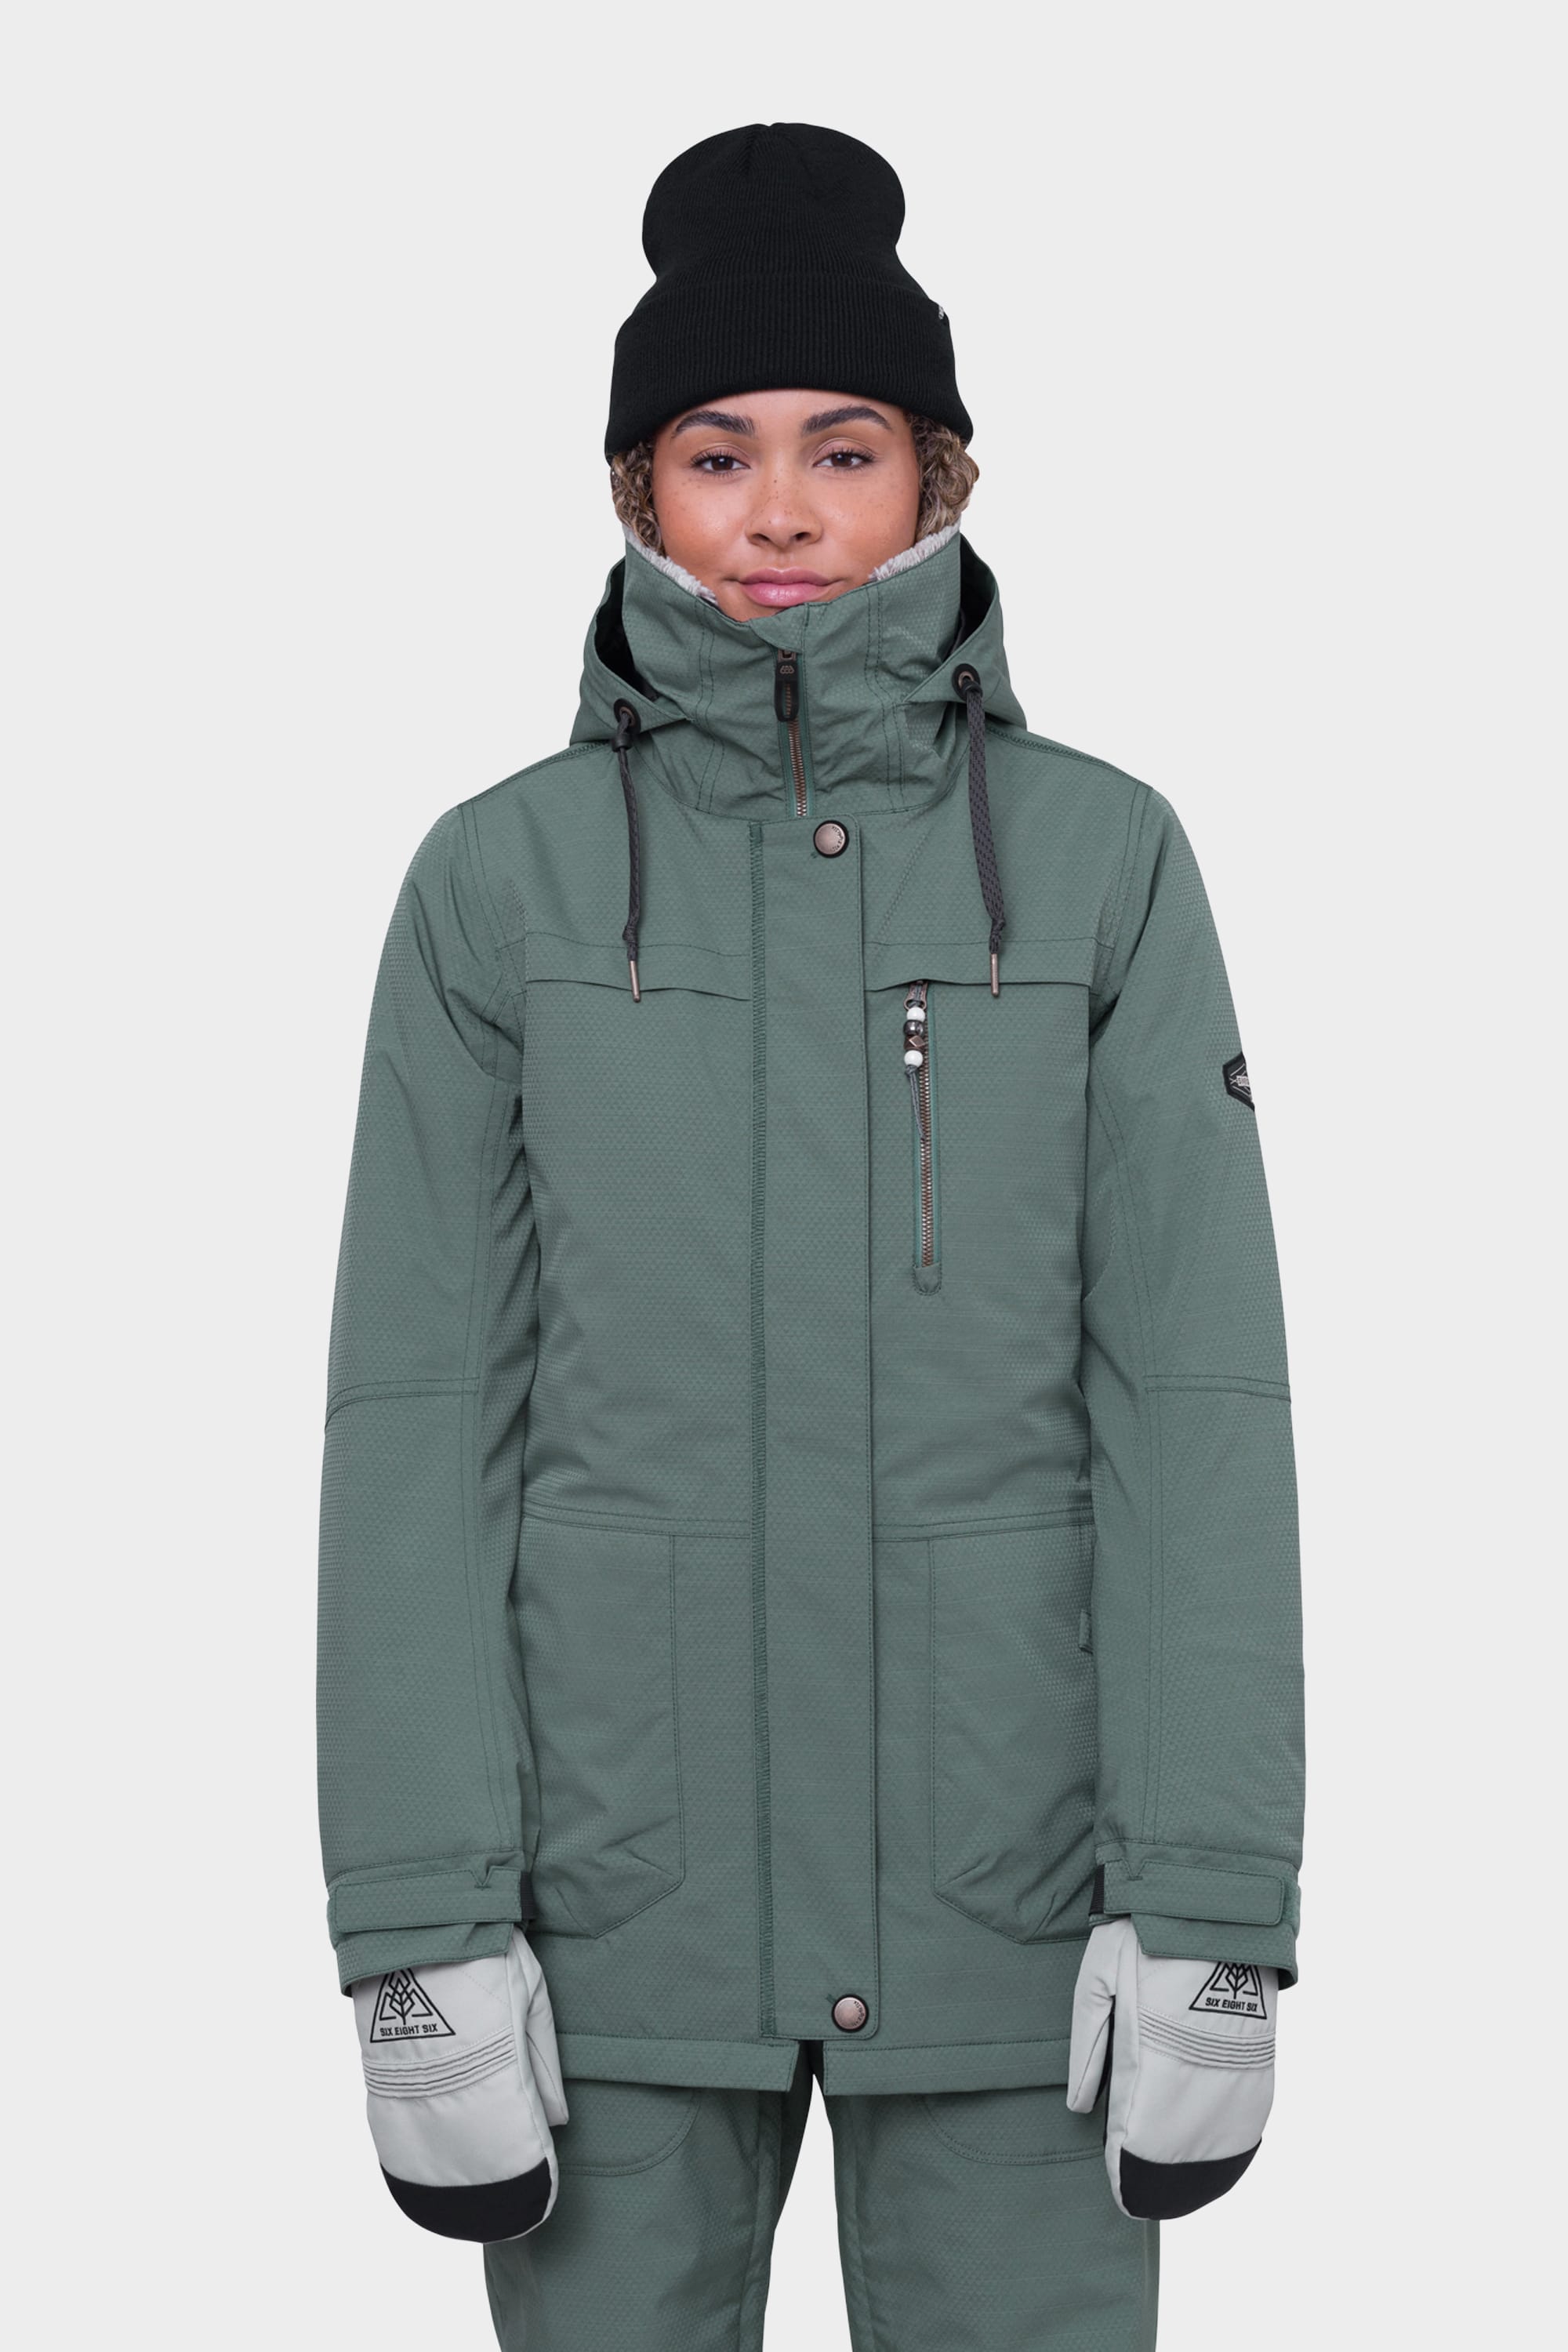 686 Technical Apparel  Women's Snow Jackets –